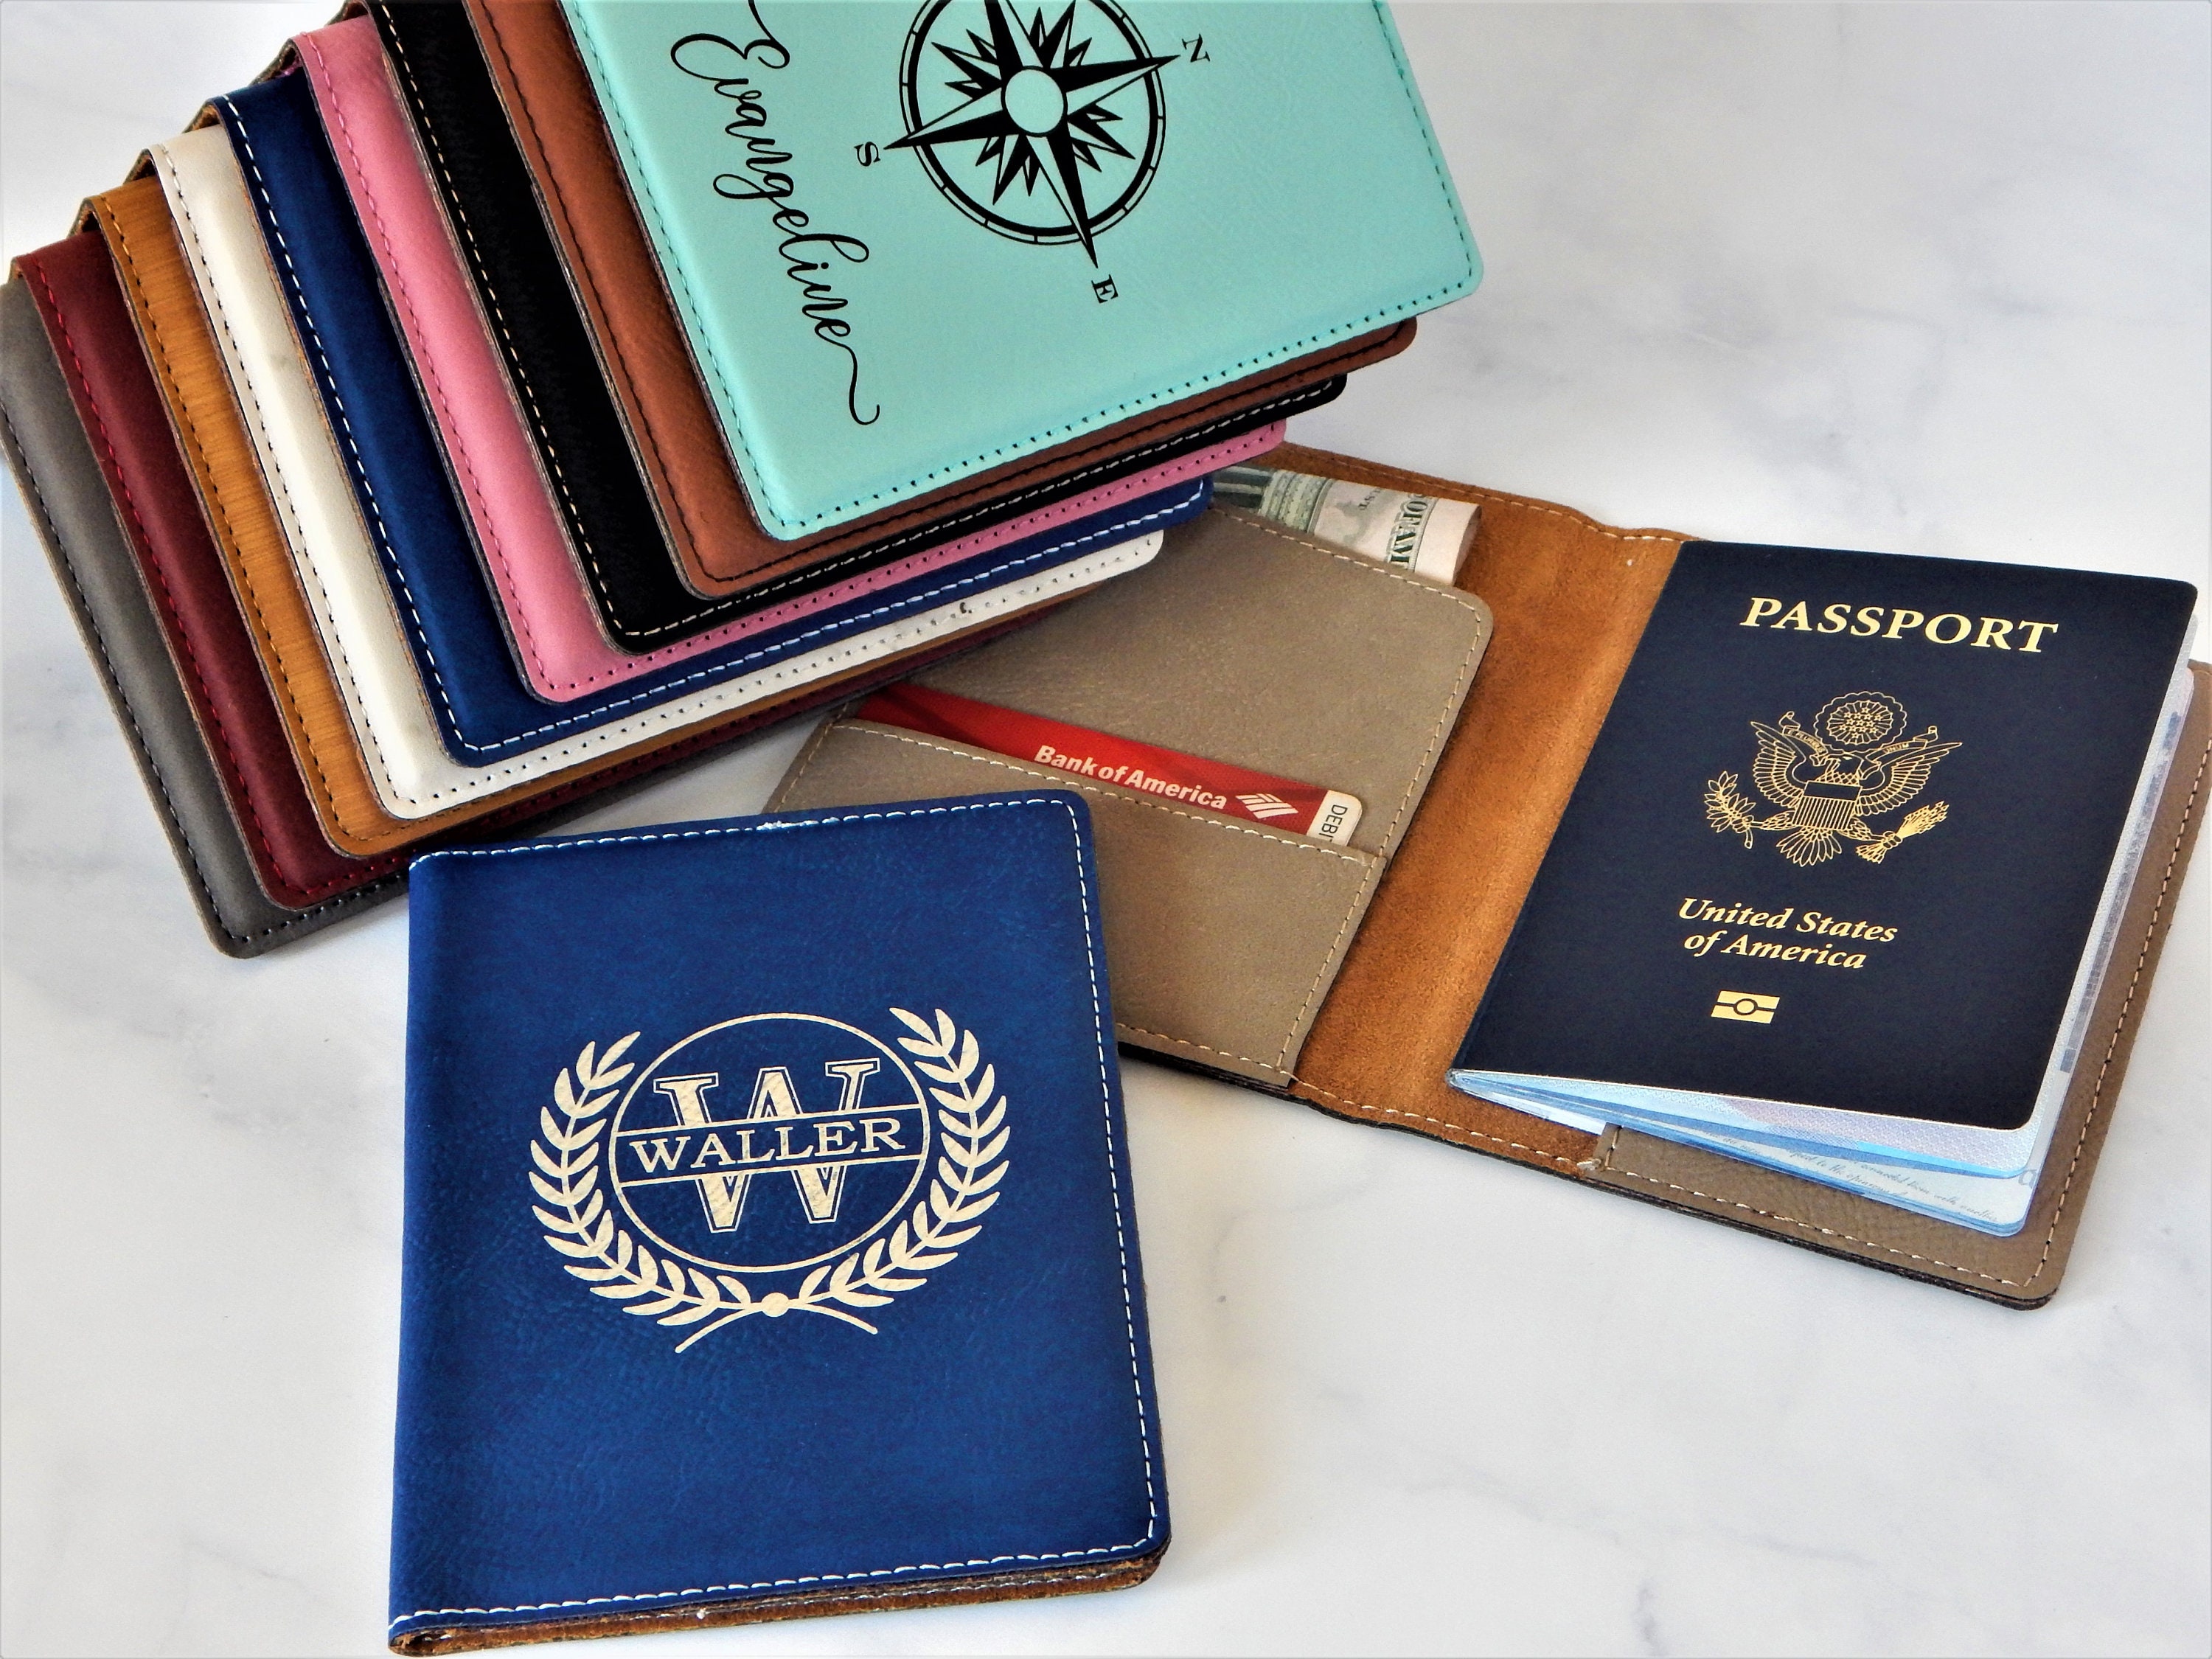 Passport Cover Case Monogram Leather Passport Holder -  Canada